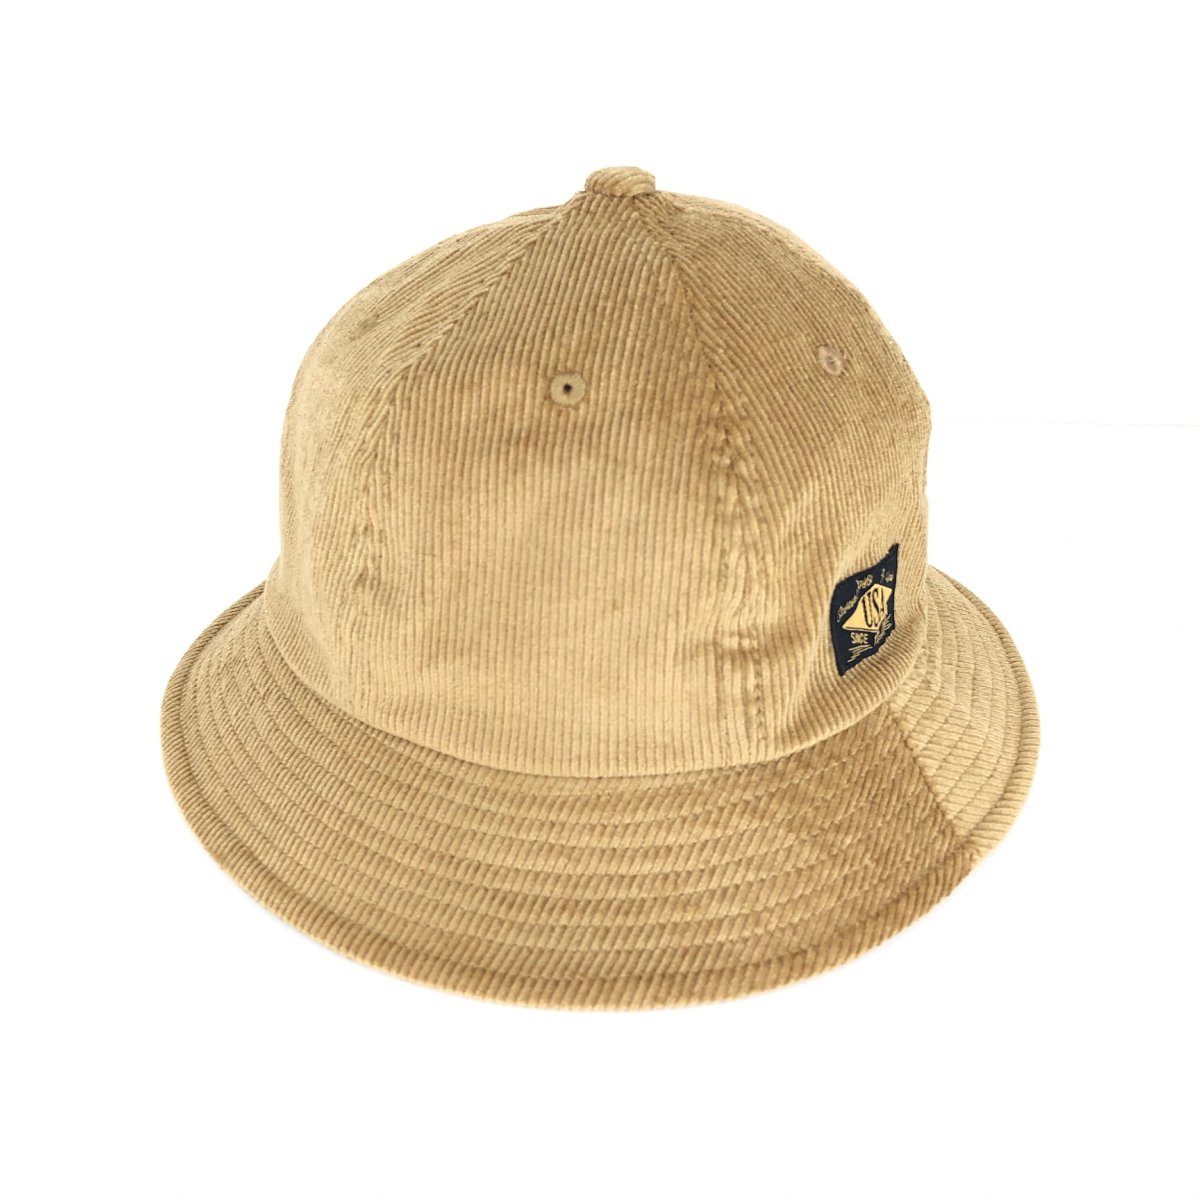 Cod Metro Hat